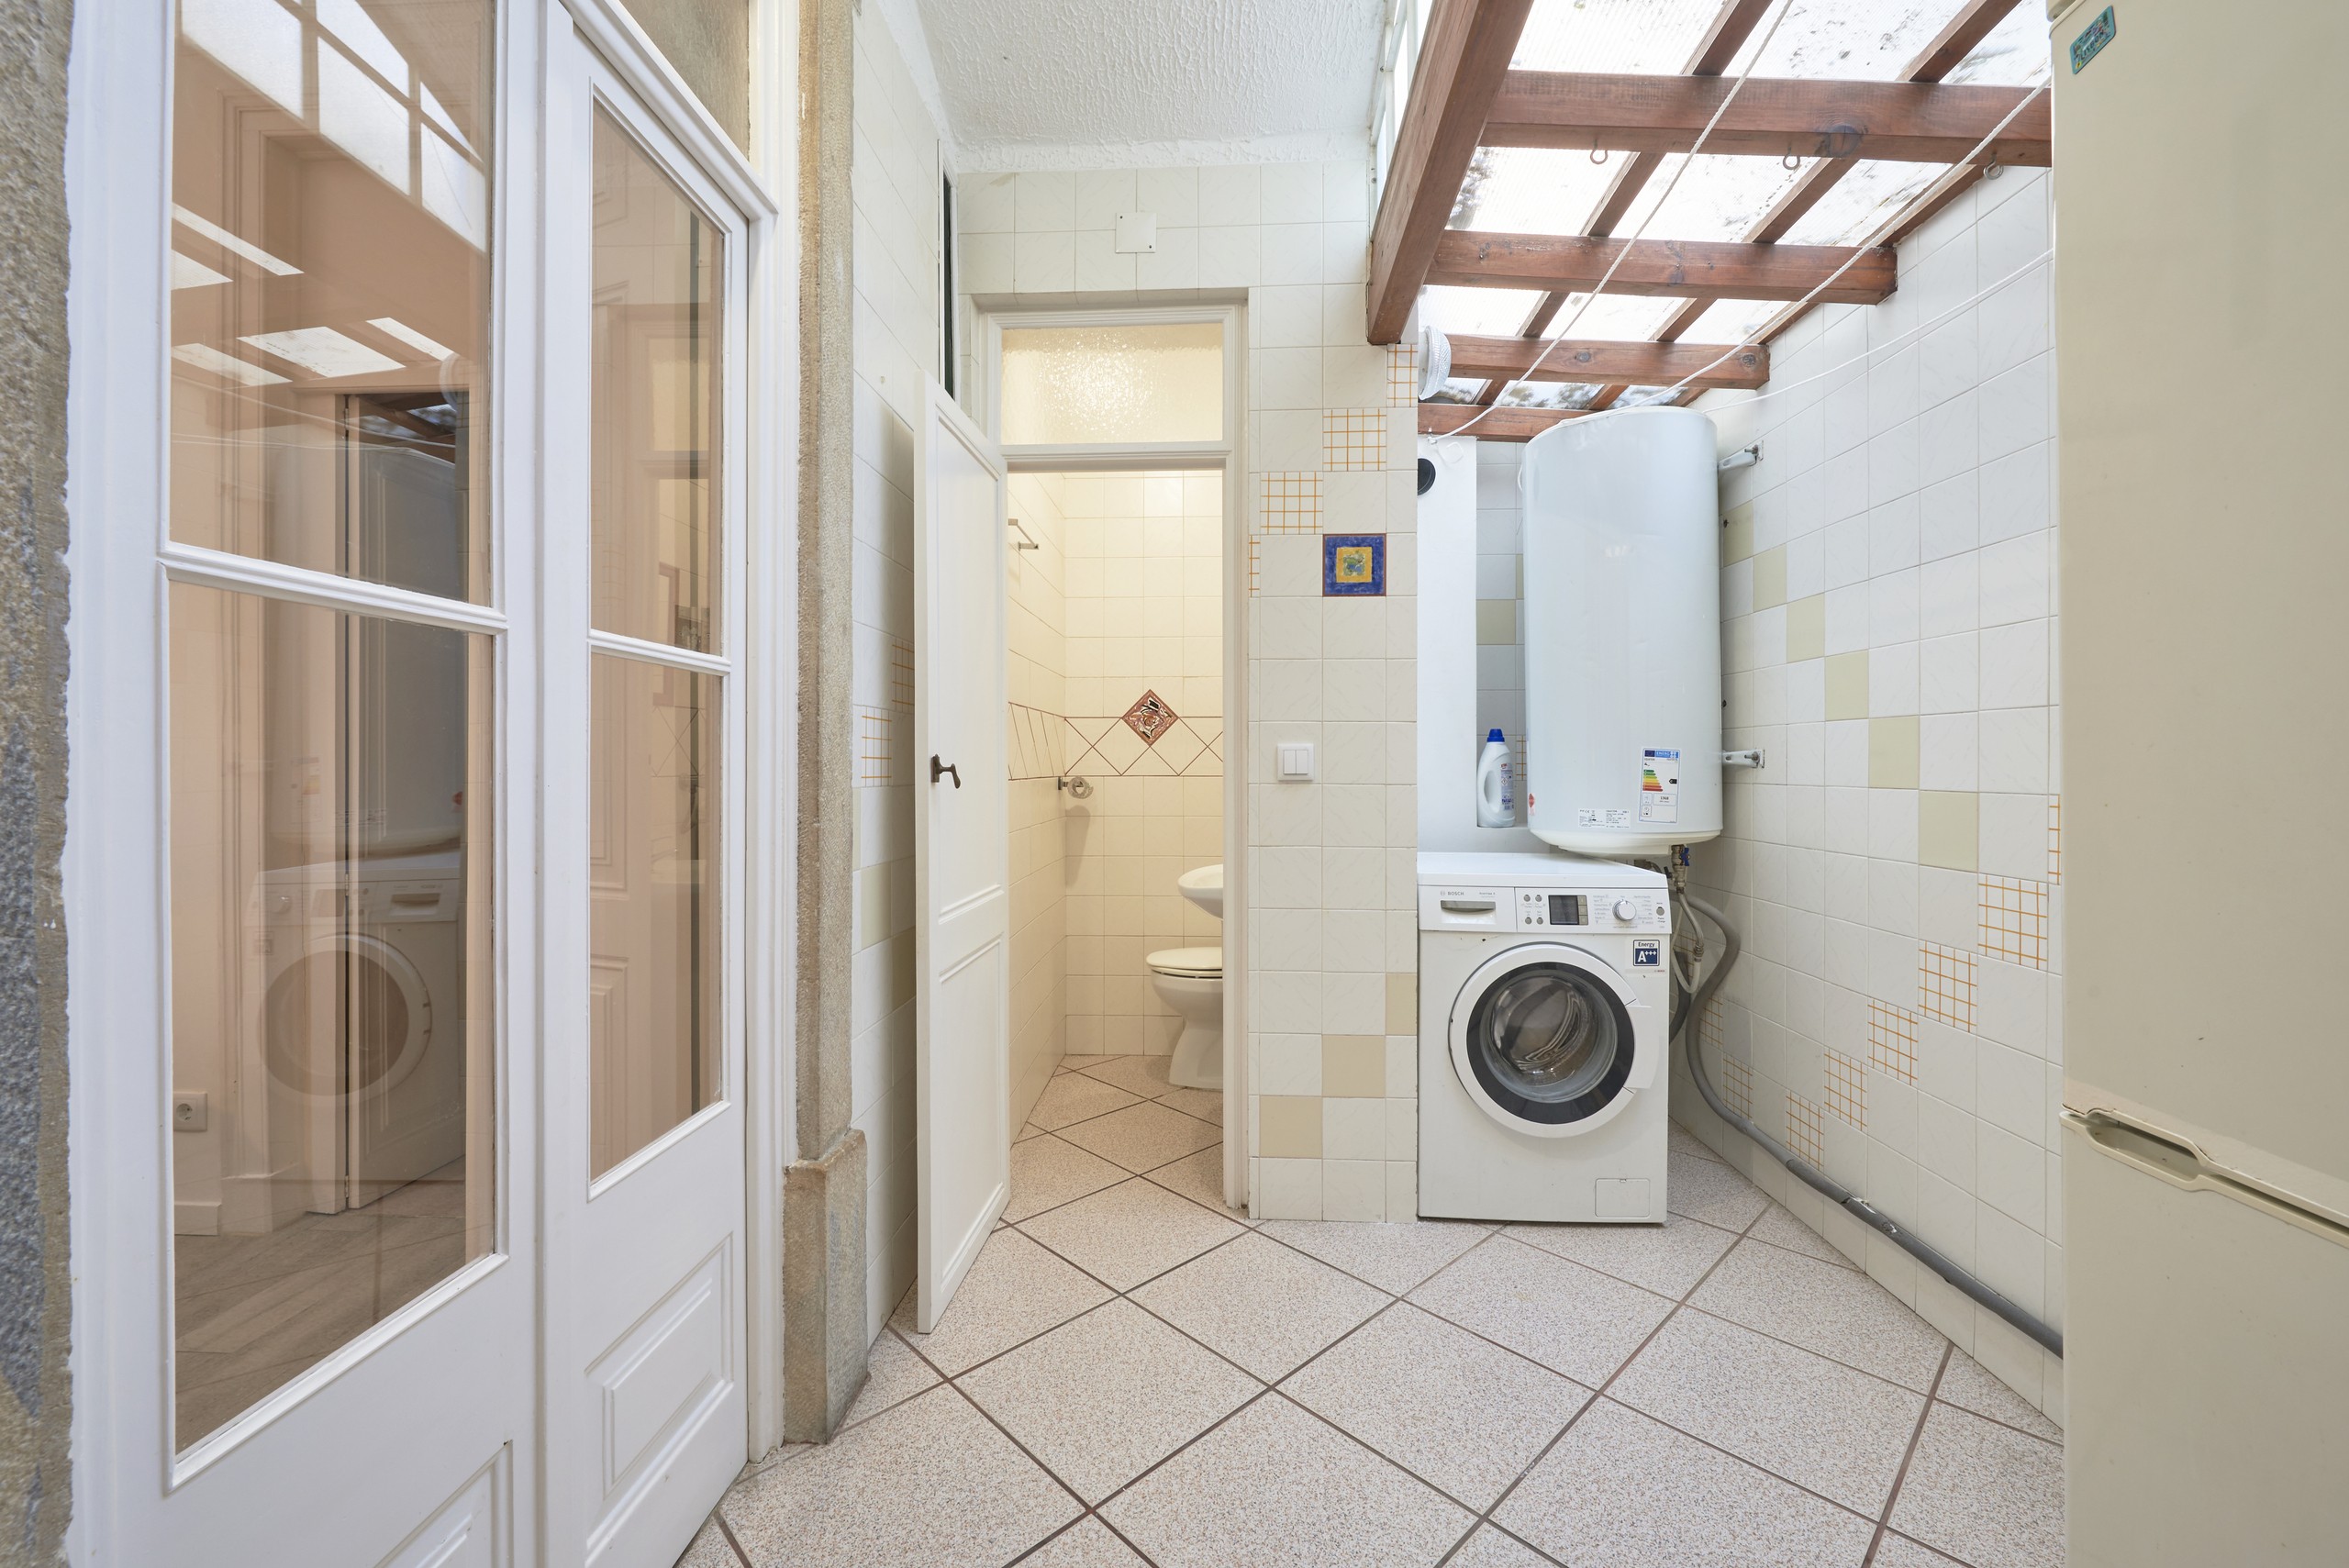 Rent Room Lisbon – Avenida 1# – Laundry Room